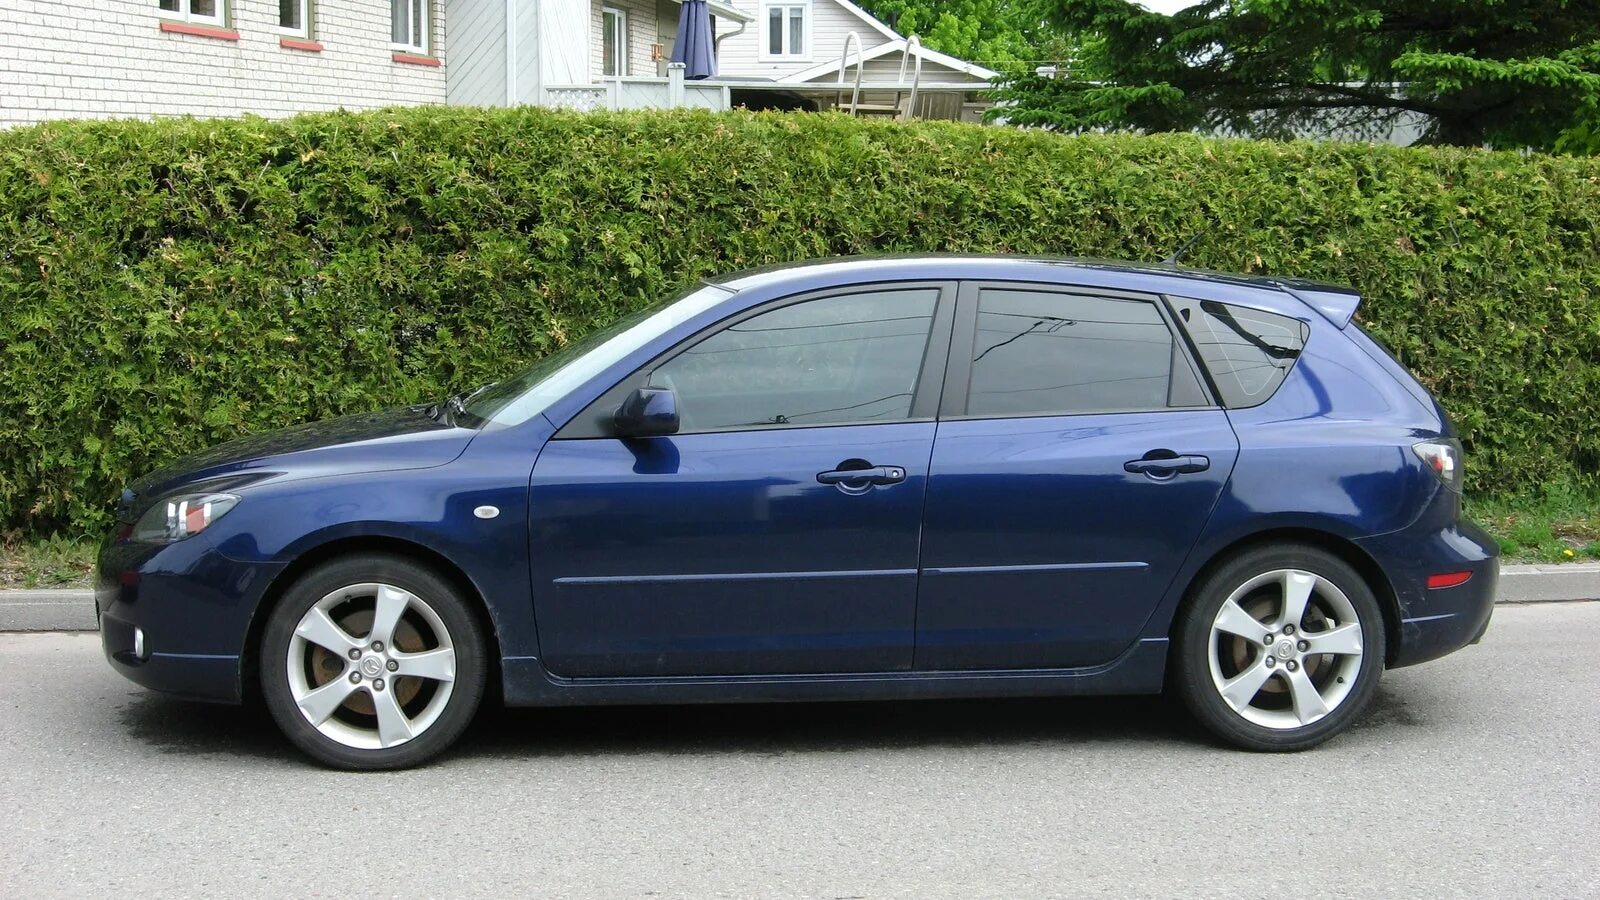 Mazda 3 2005 хэтчбек. Мазда 3 БК хэтчбек синяя. Мазда 3 2008 хэтчбек синяя. Мазда 3 хет хэтчбек 2005. Мазда хэтчбек 2005